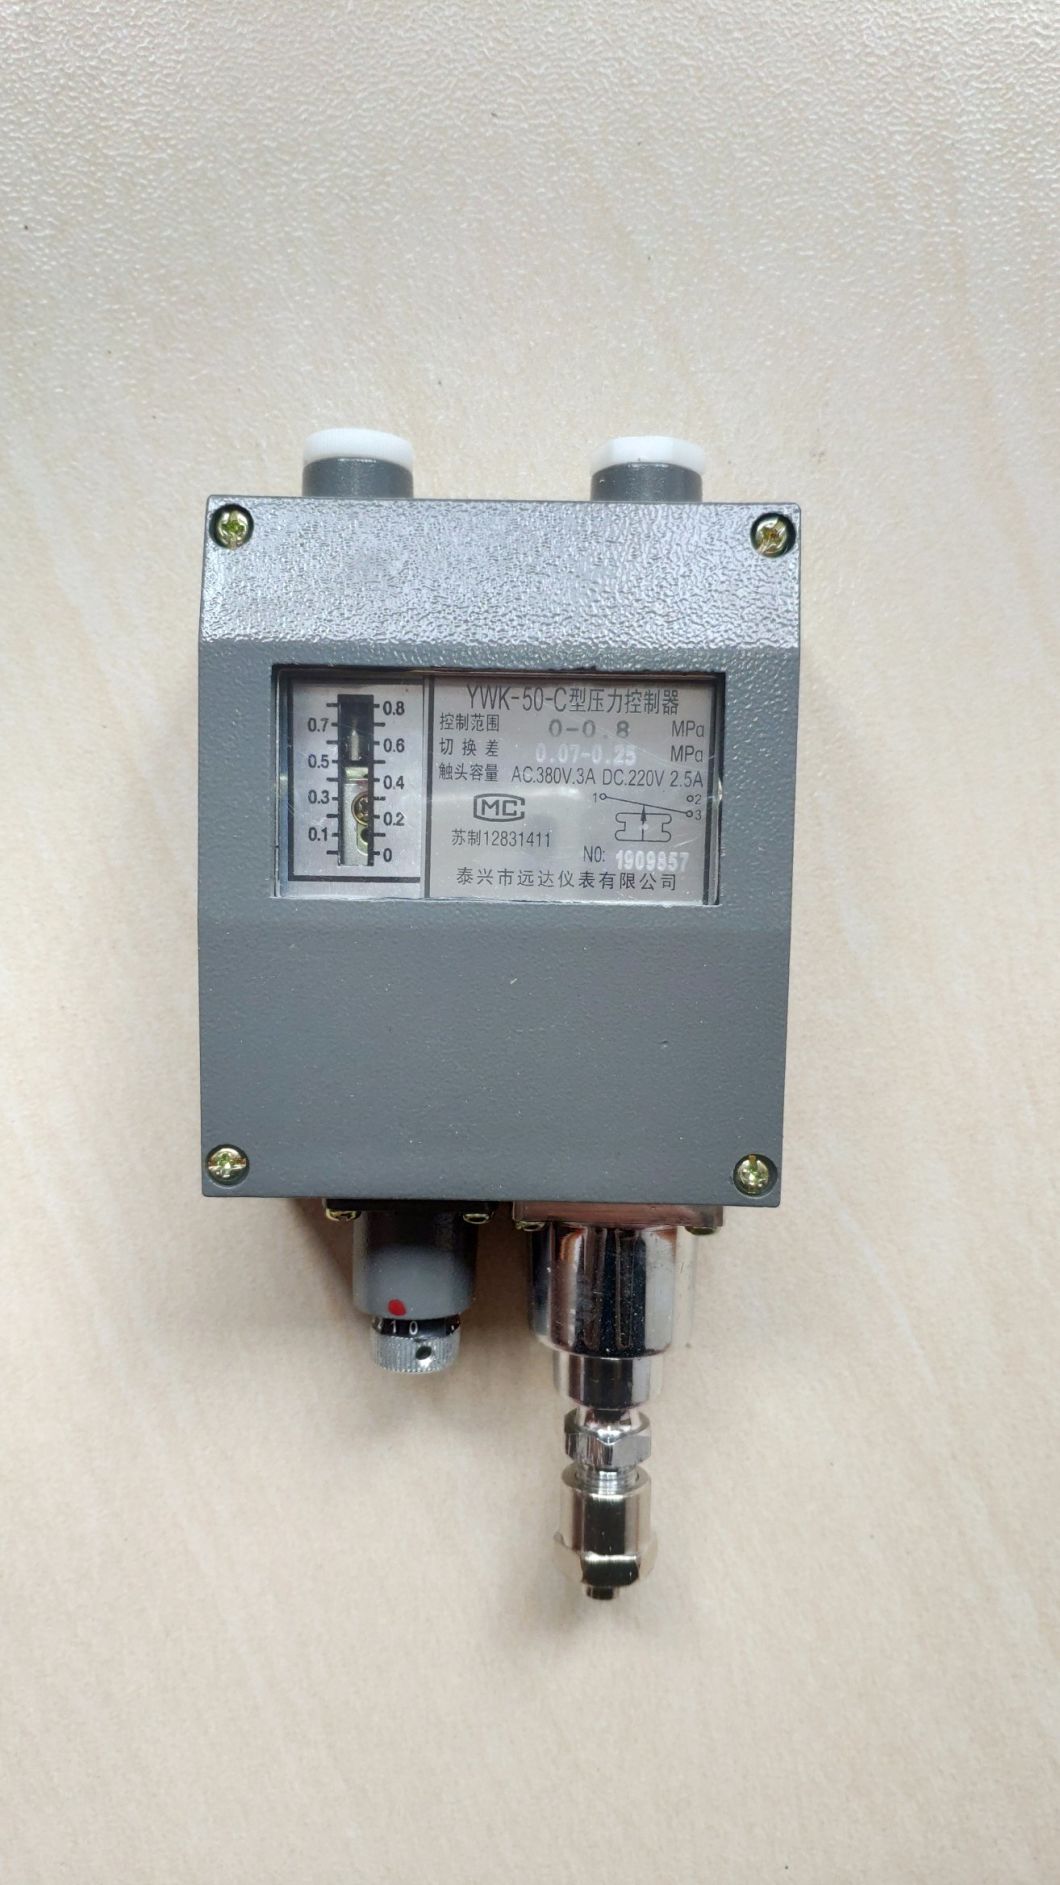 Ywk-50-C Made in China Ywk 50 C Marine Pressure Switch Controller